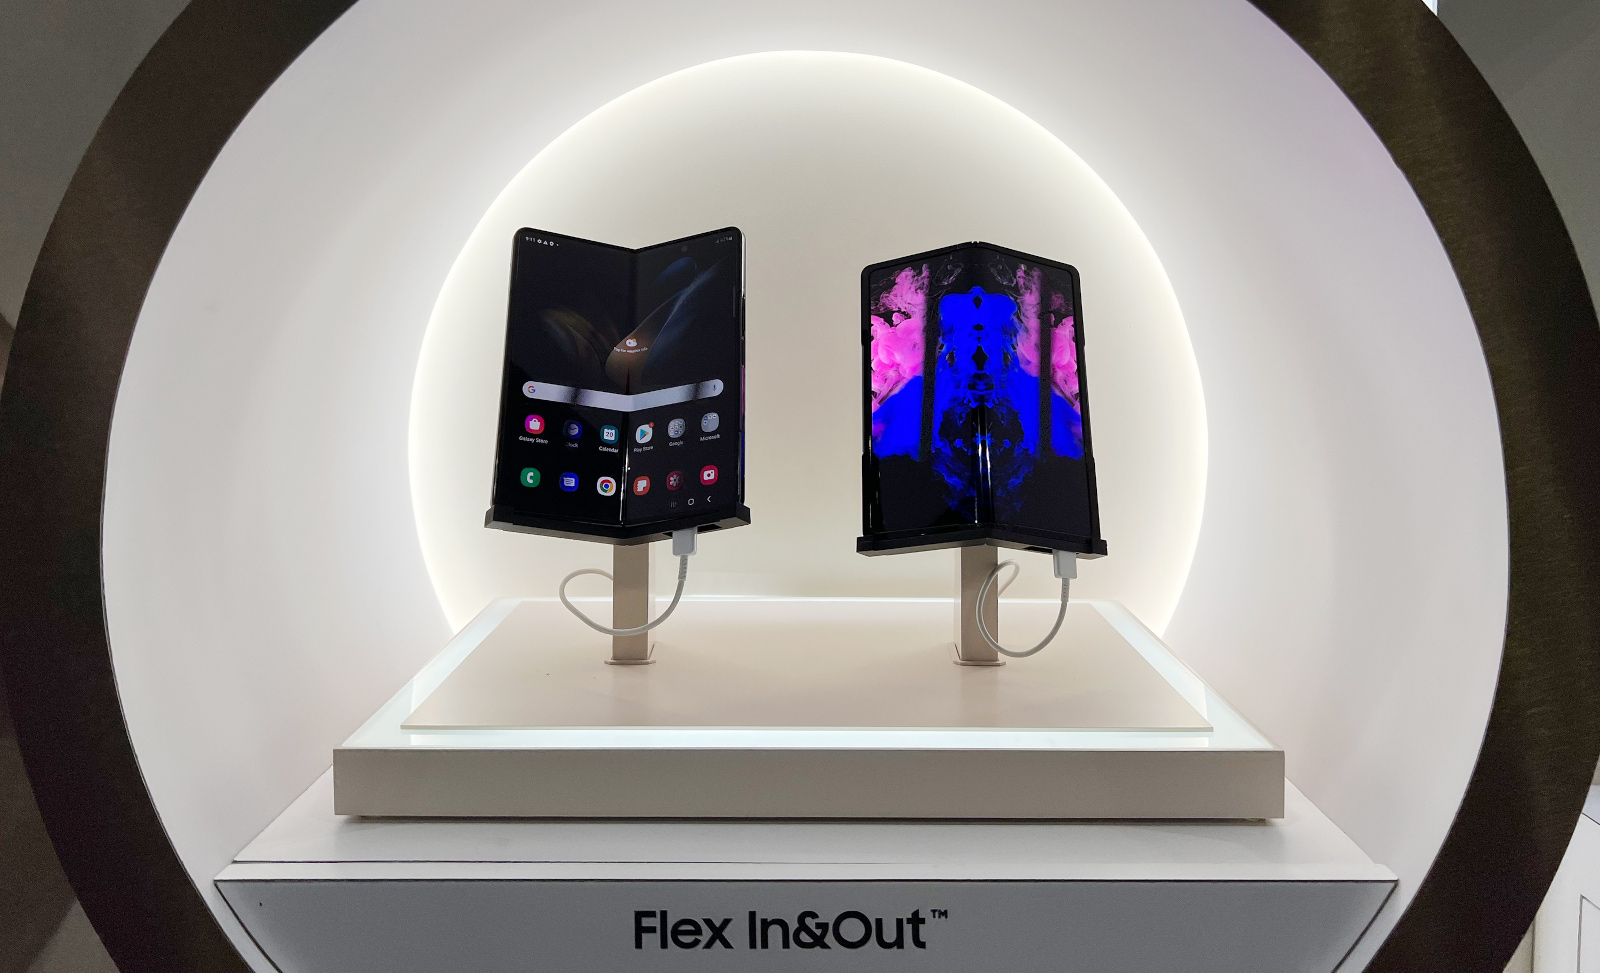 Samsung’s new Sensor OLED display can read fingerprints anywhere on the screen